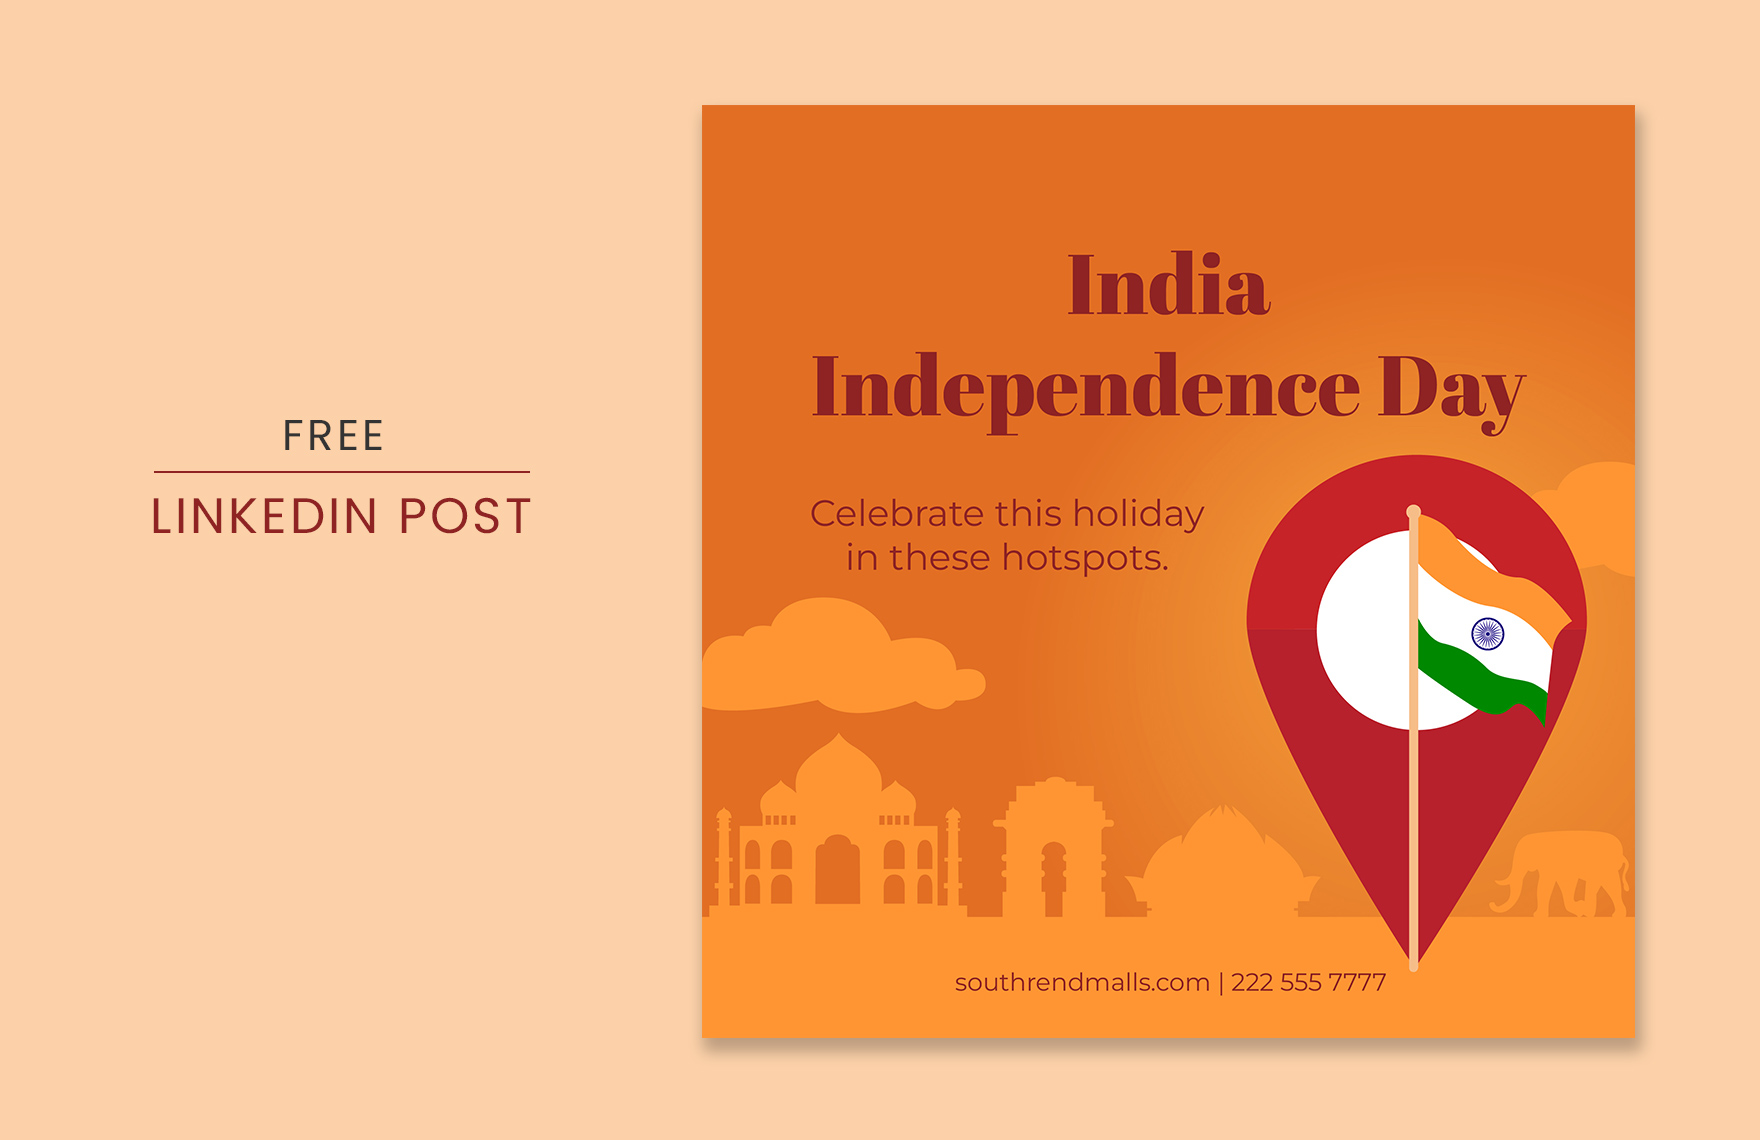 Free India Independence Day LinkedIn Post Template in PDF, Illustrator, SVG, JPEG